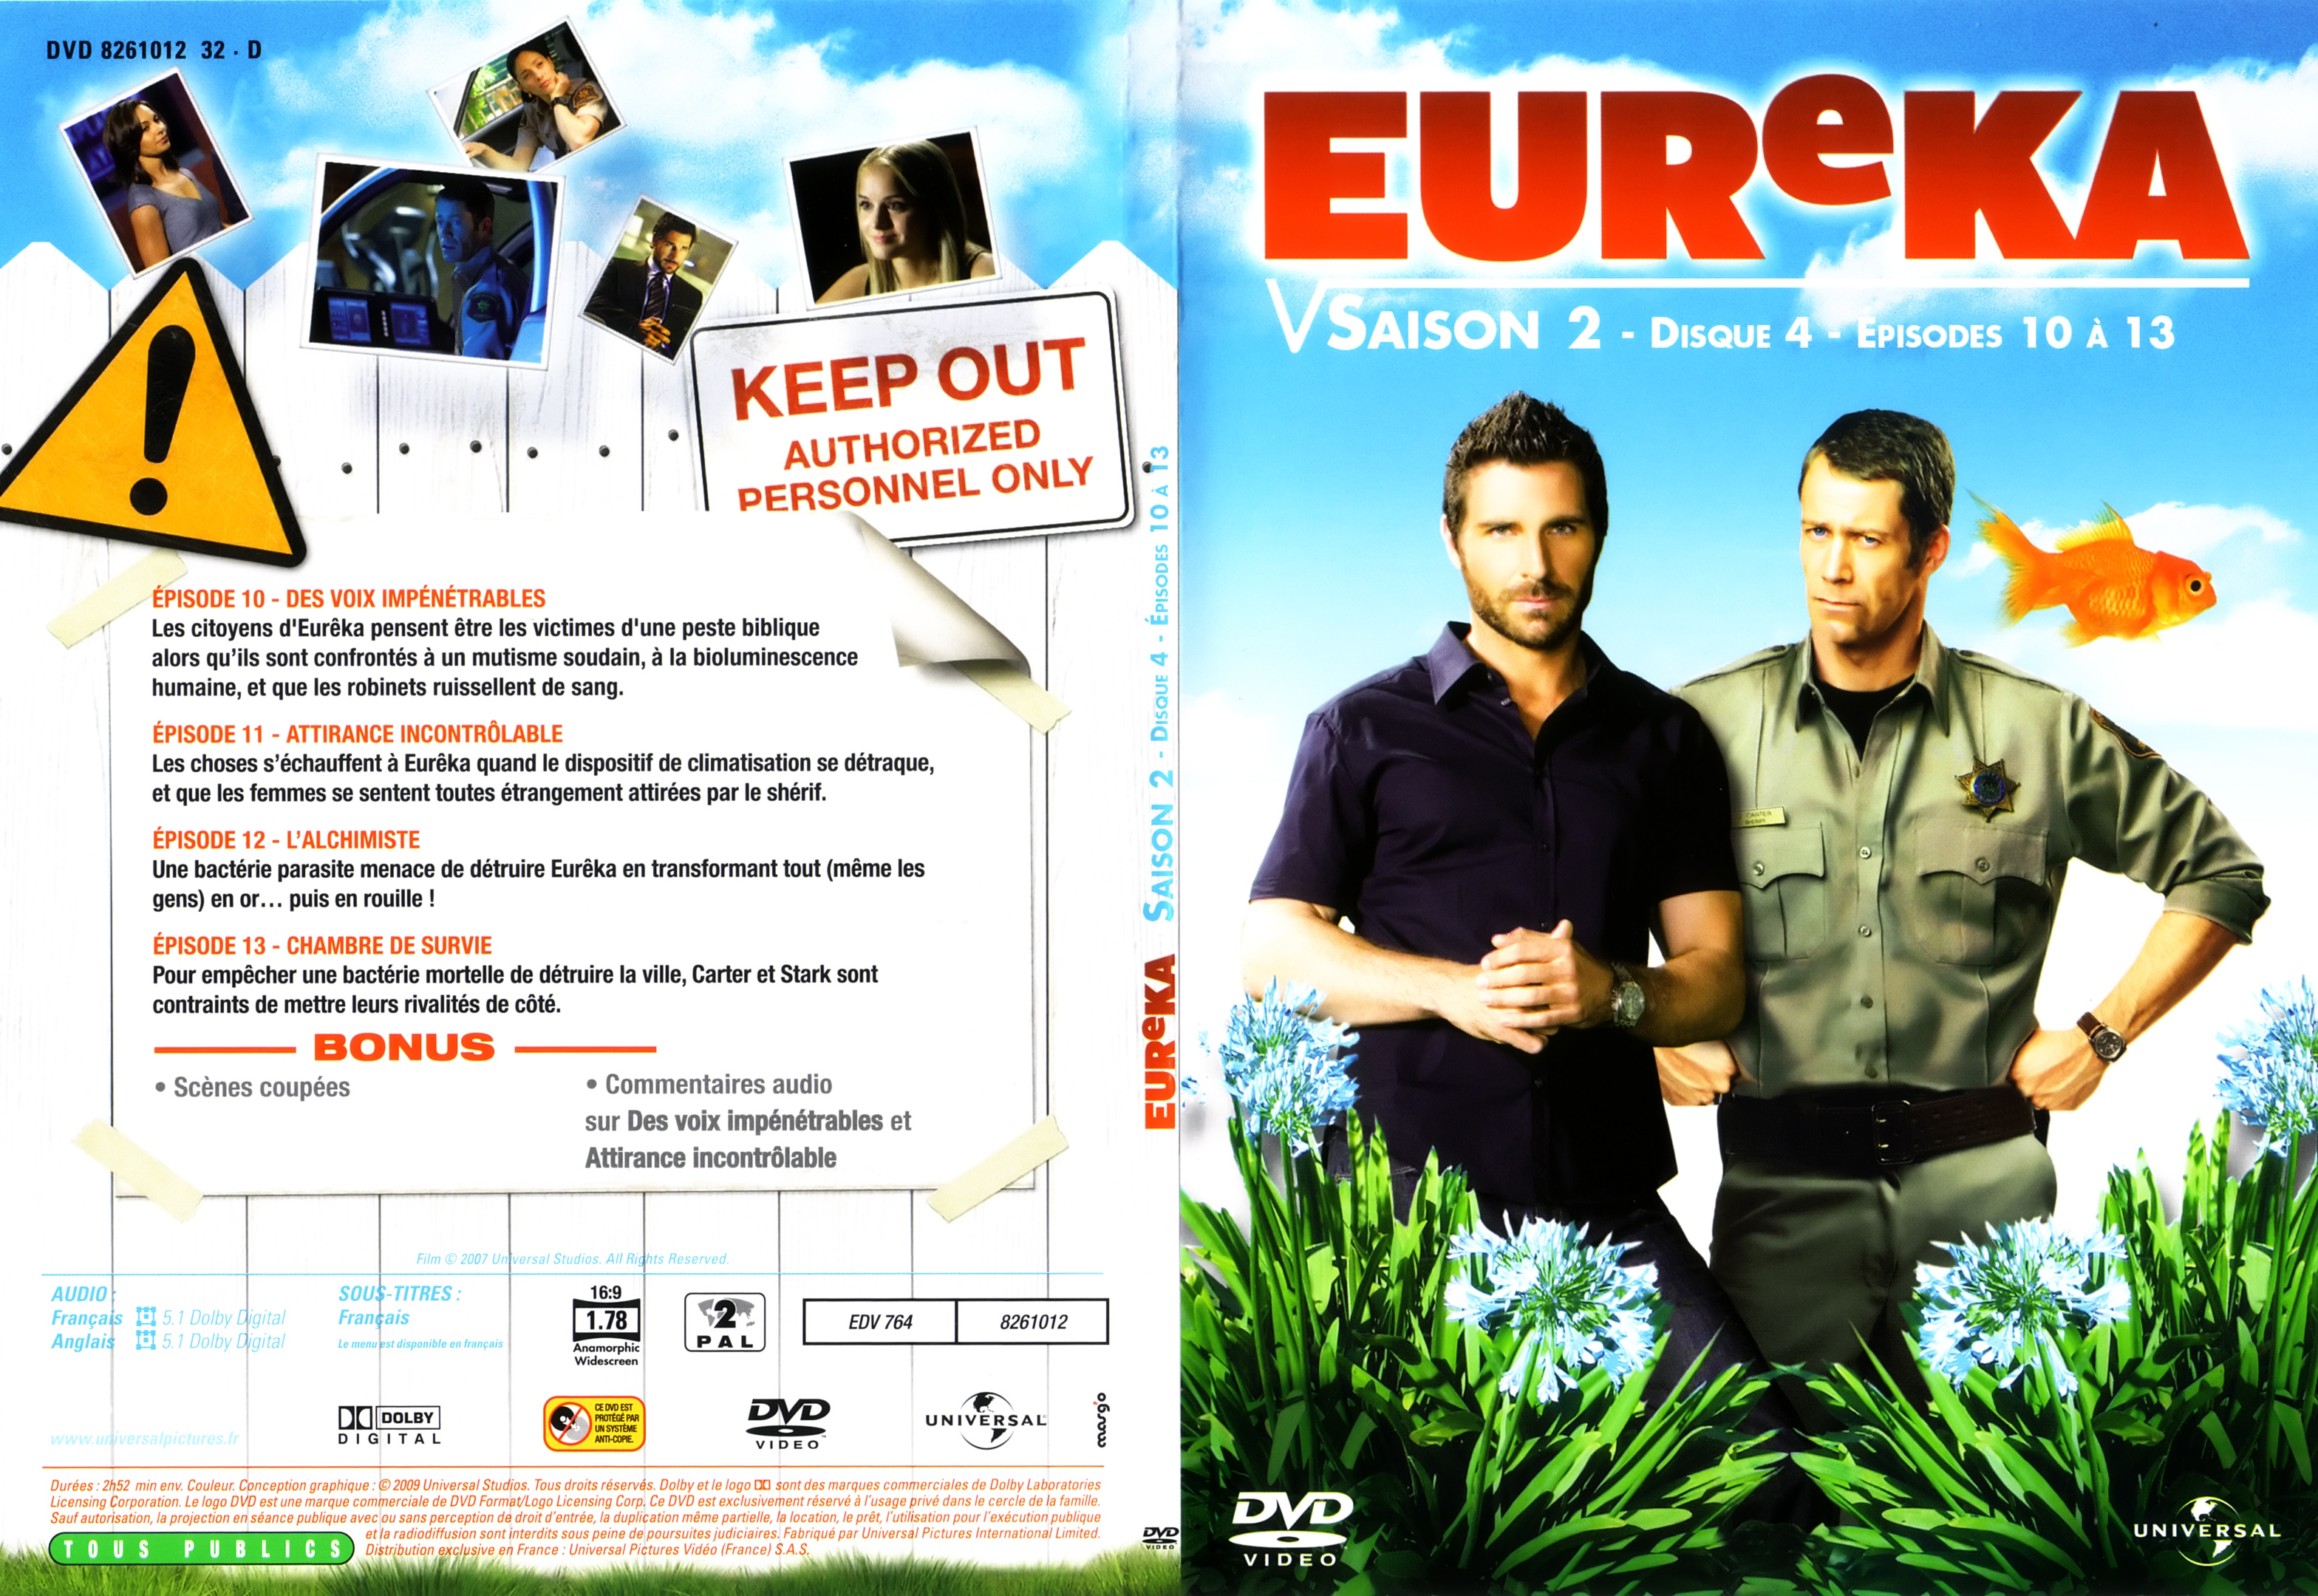 Jaquette DVD Eureka saison 2 DVD 4